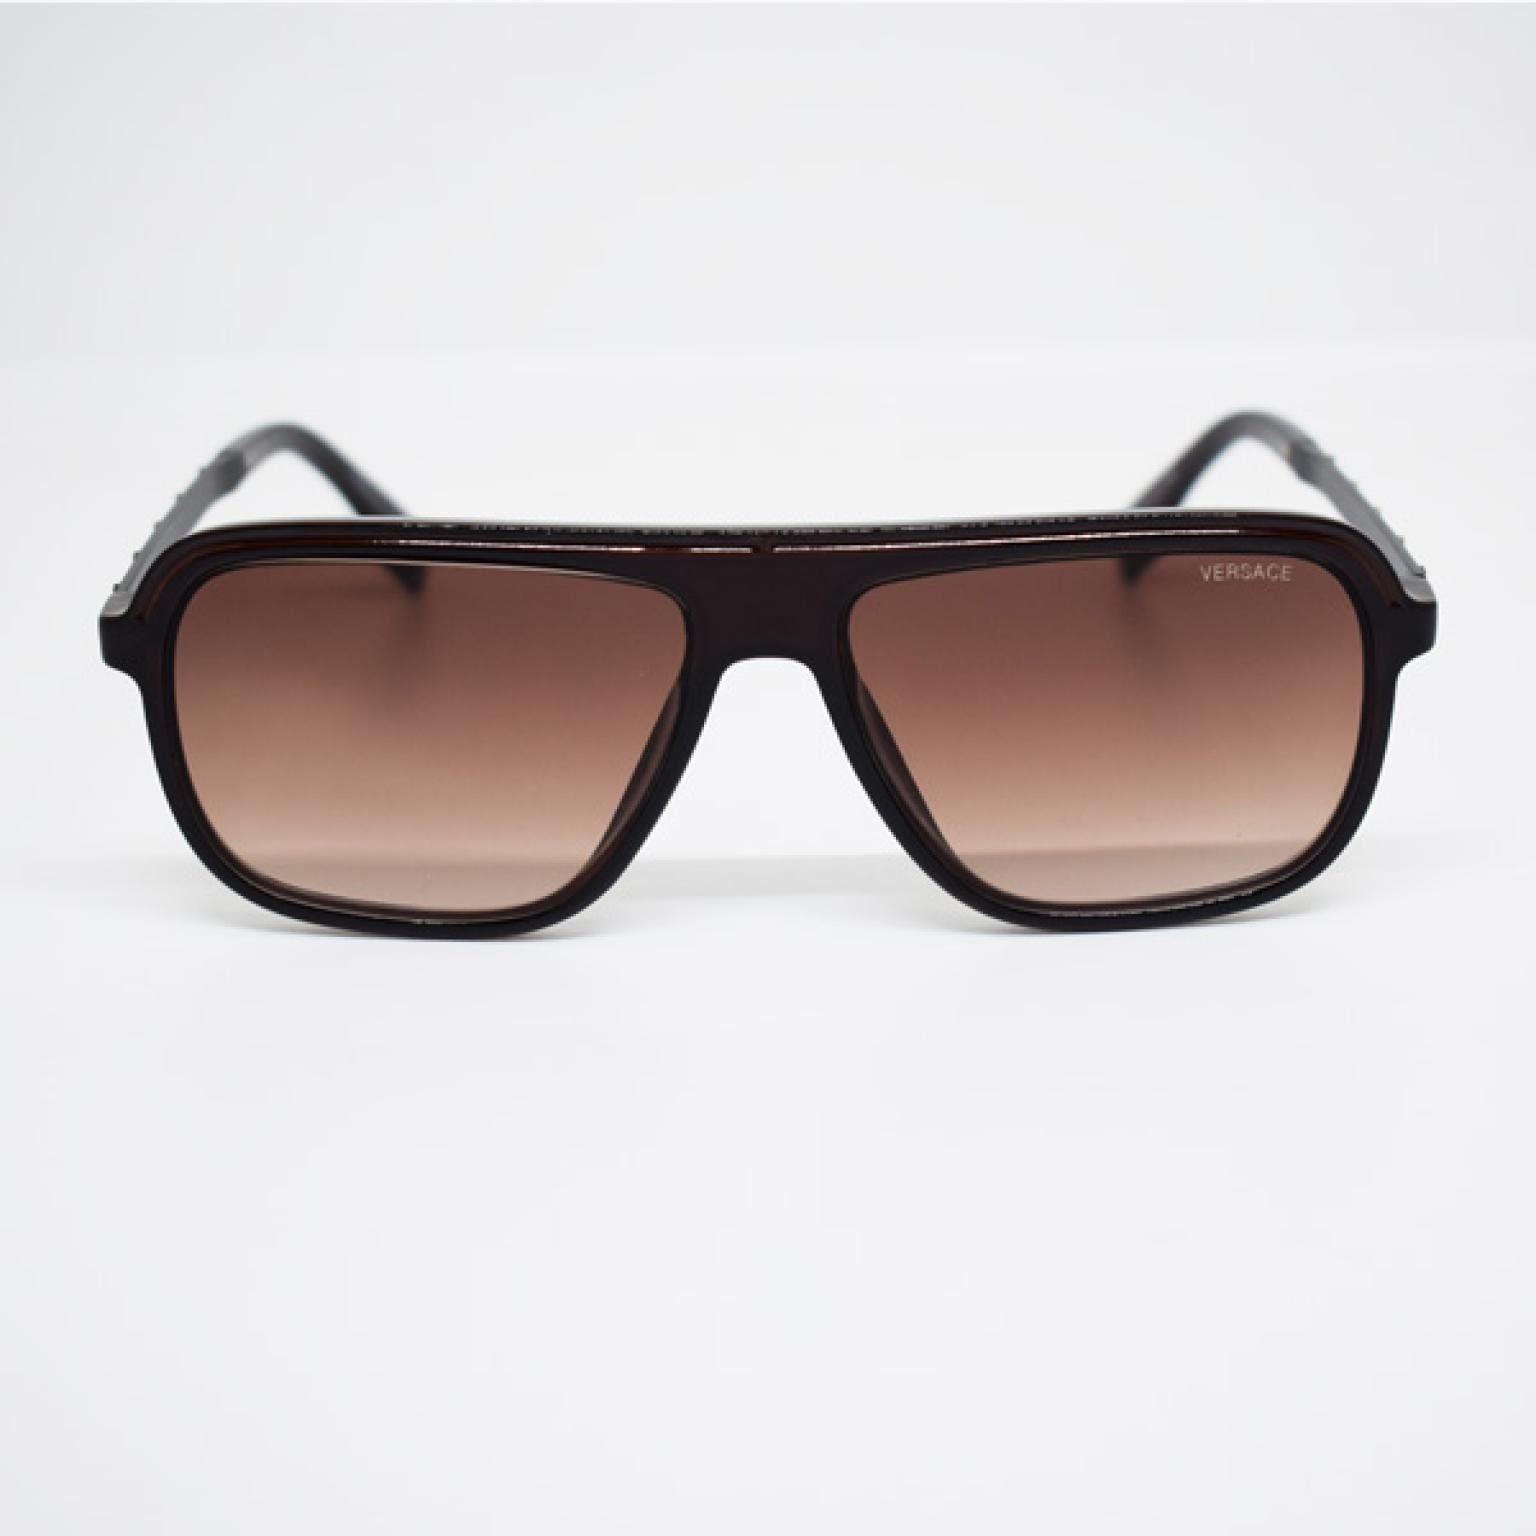 Trendy Classic Fashionable driving Unisex black brown Sunglass For Men Women Uv400 |Cbl-138|